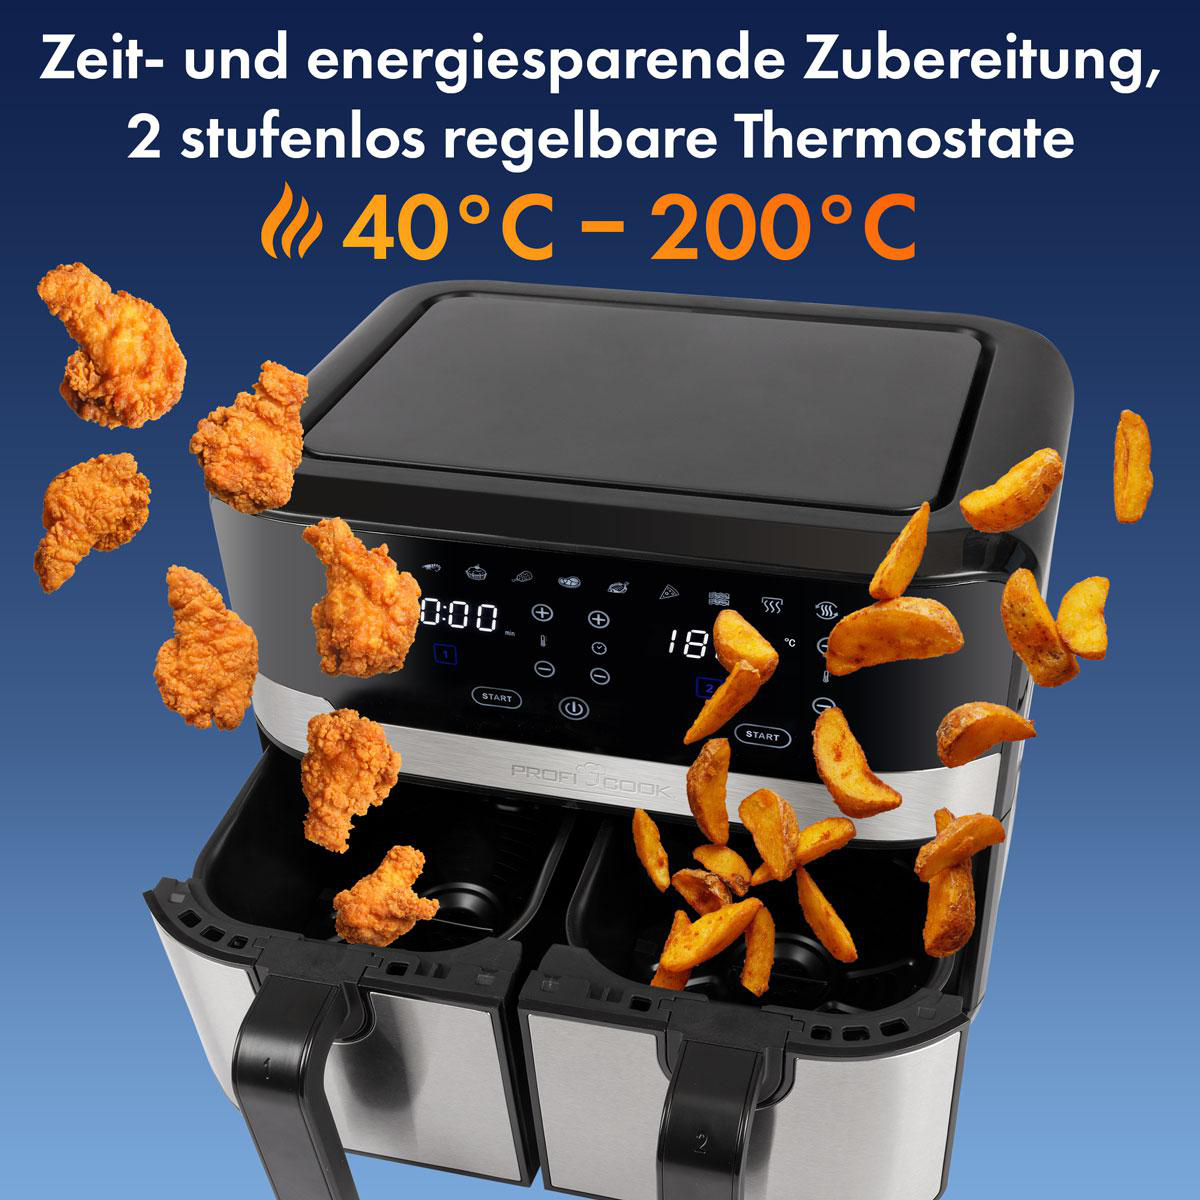 PROFICOOK PC-FR 1242 2400 H Heißluftfritteuse Schwarz/Edelstahl Watt